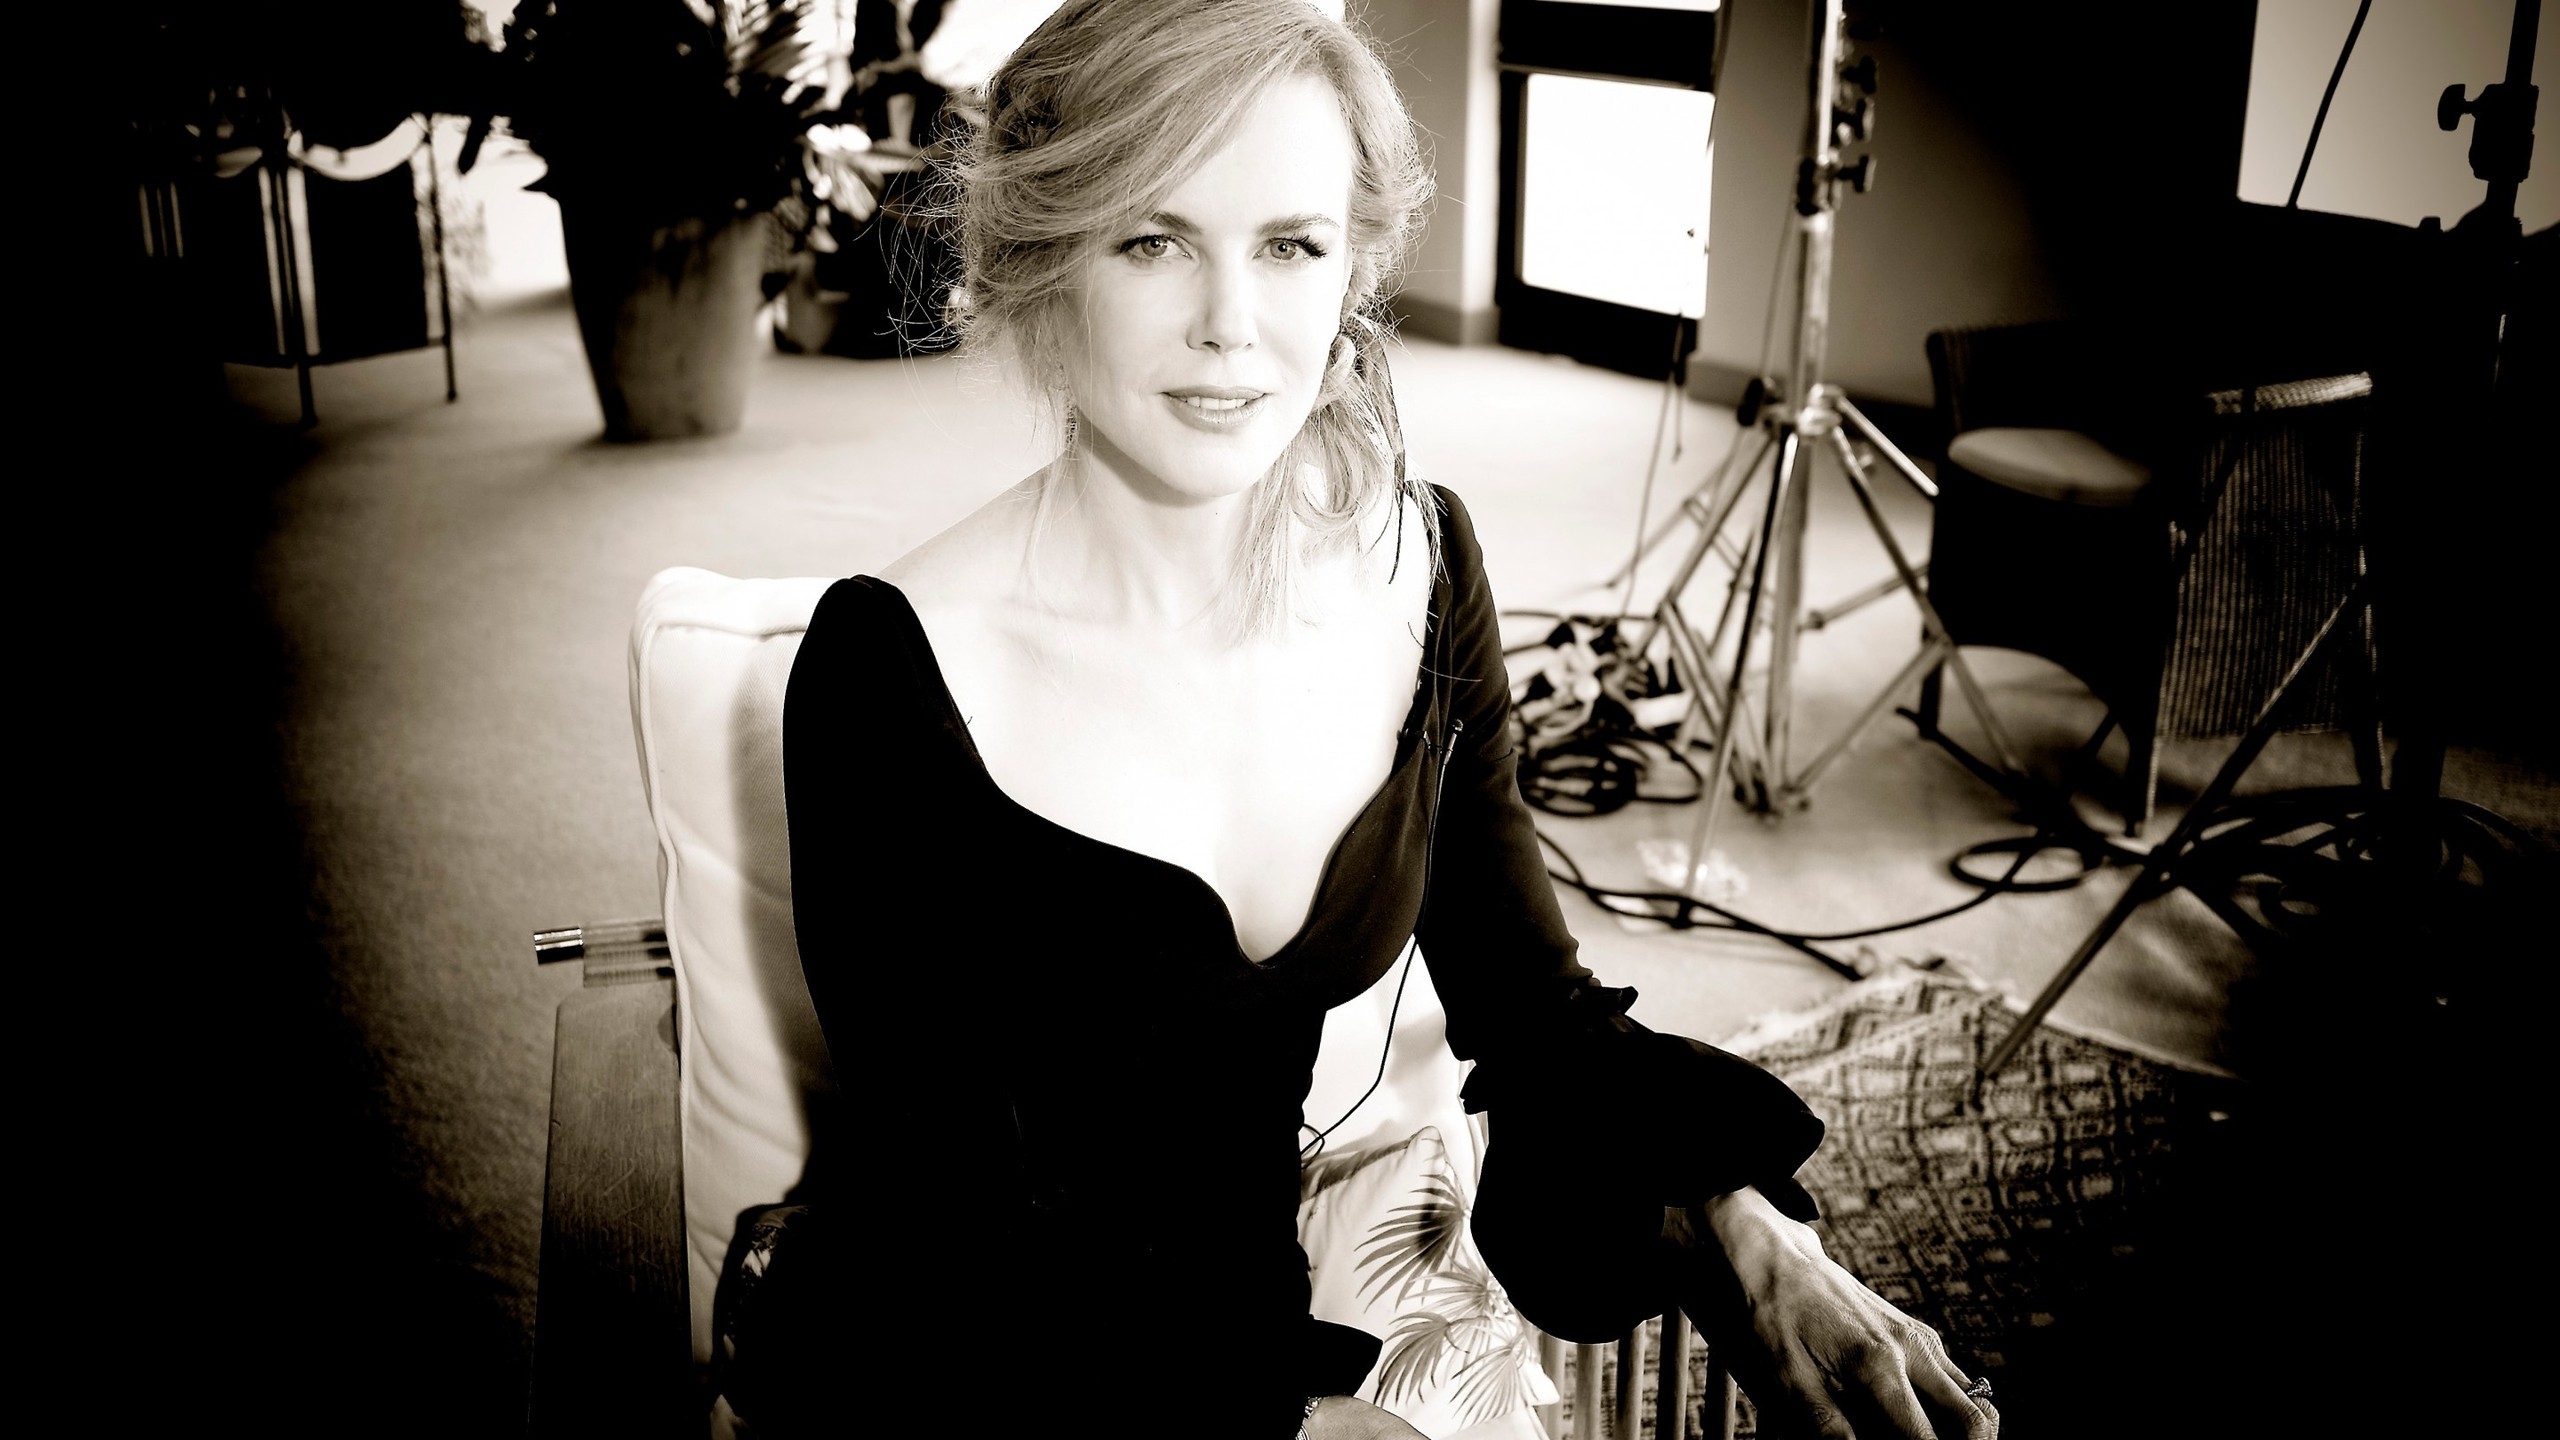 Nicole Kidman Black and White Photo for 2560x1440 HDTV resolution